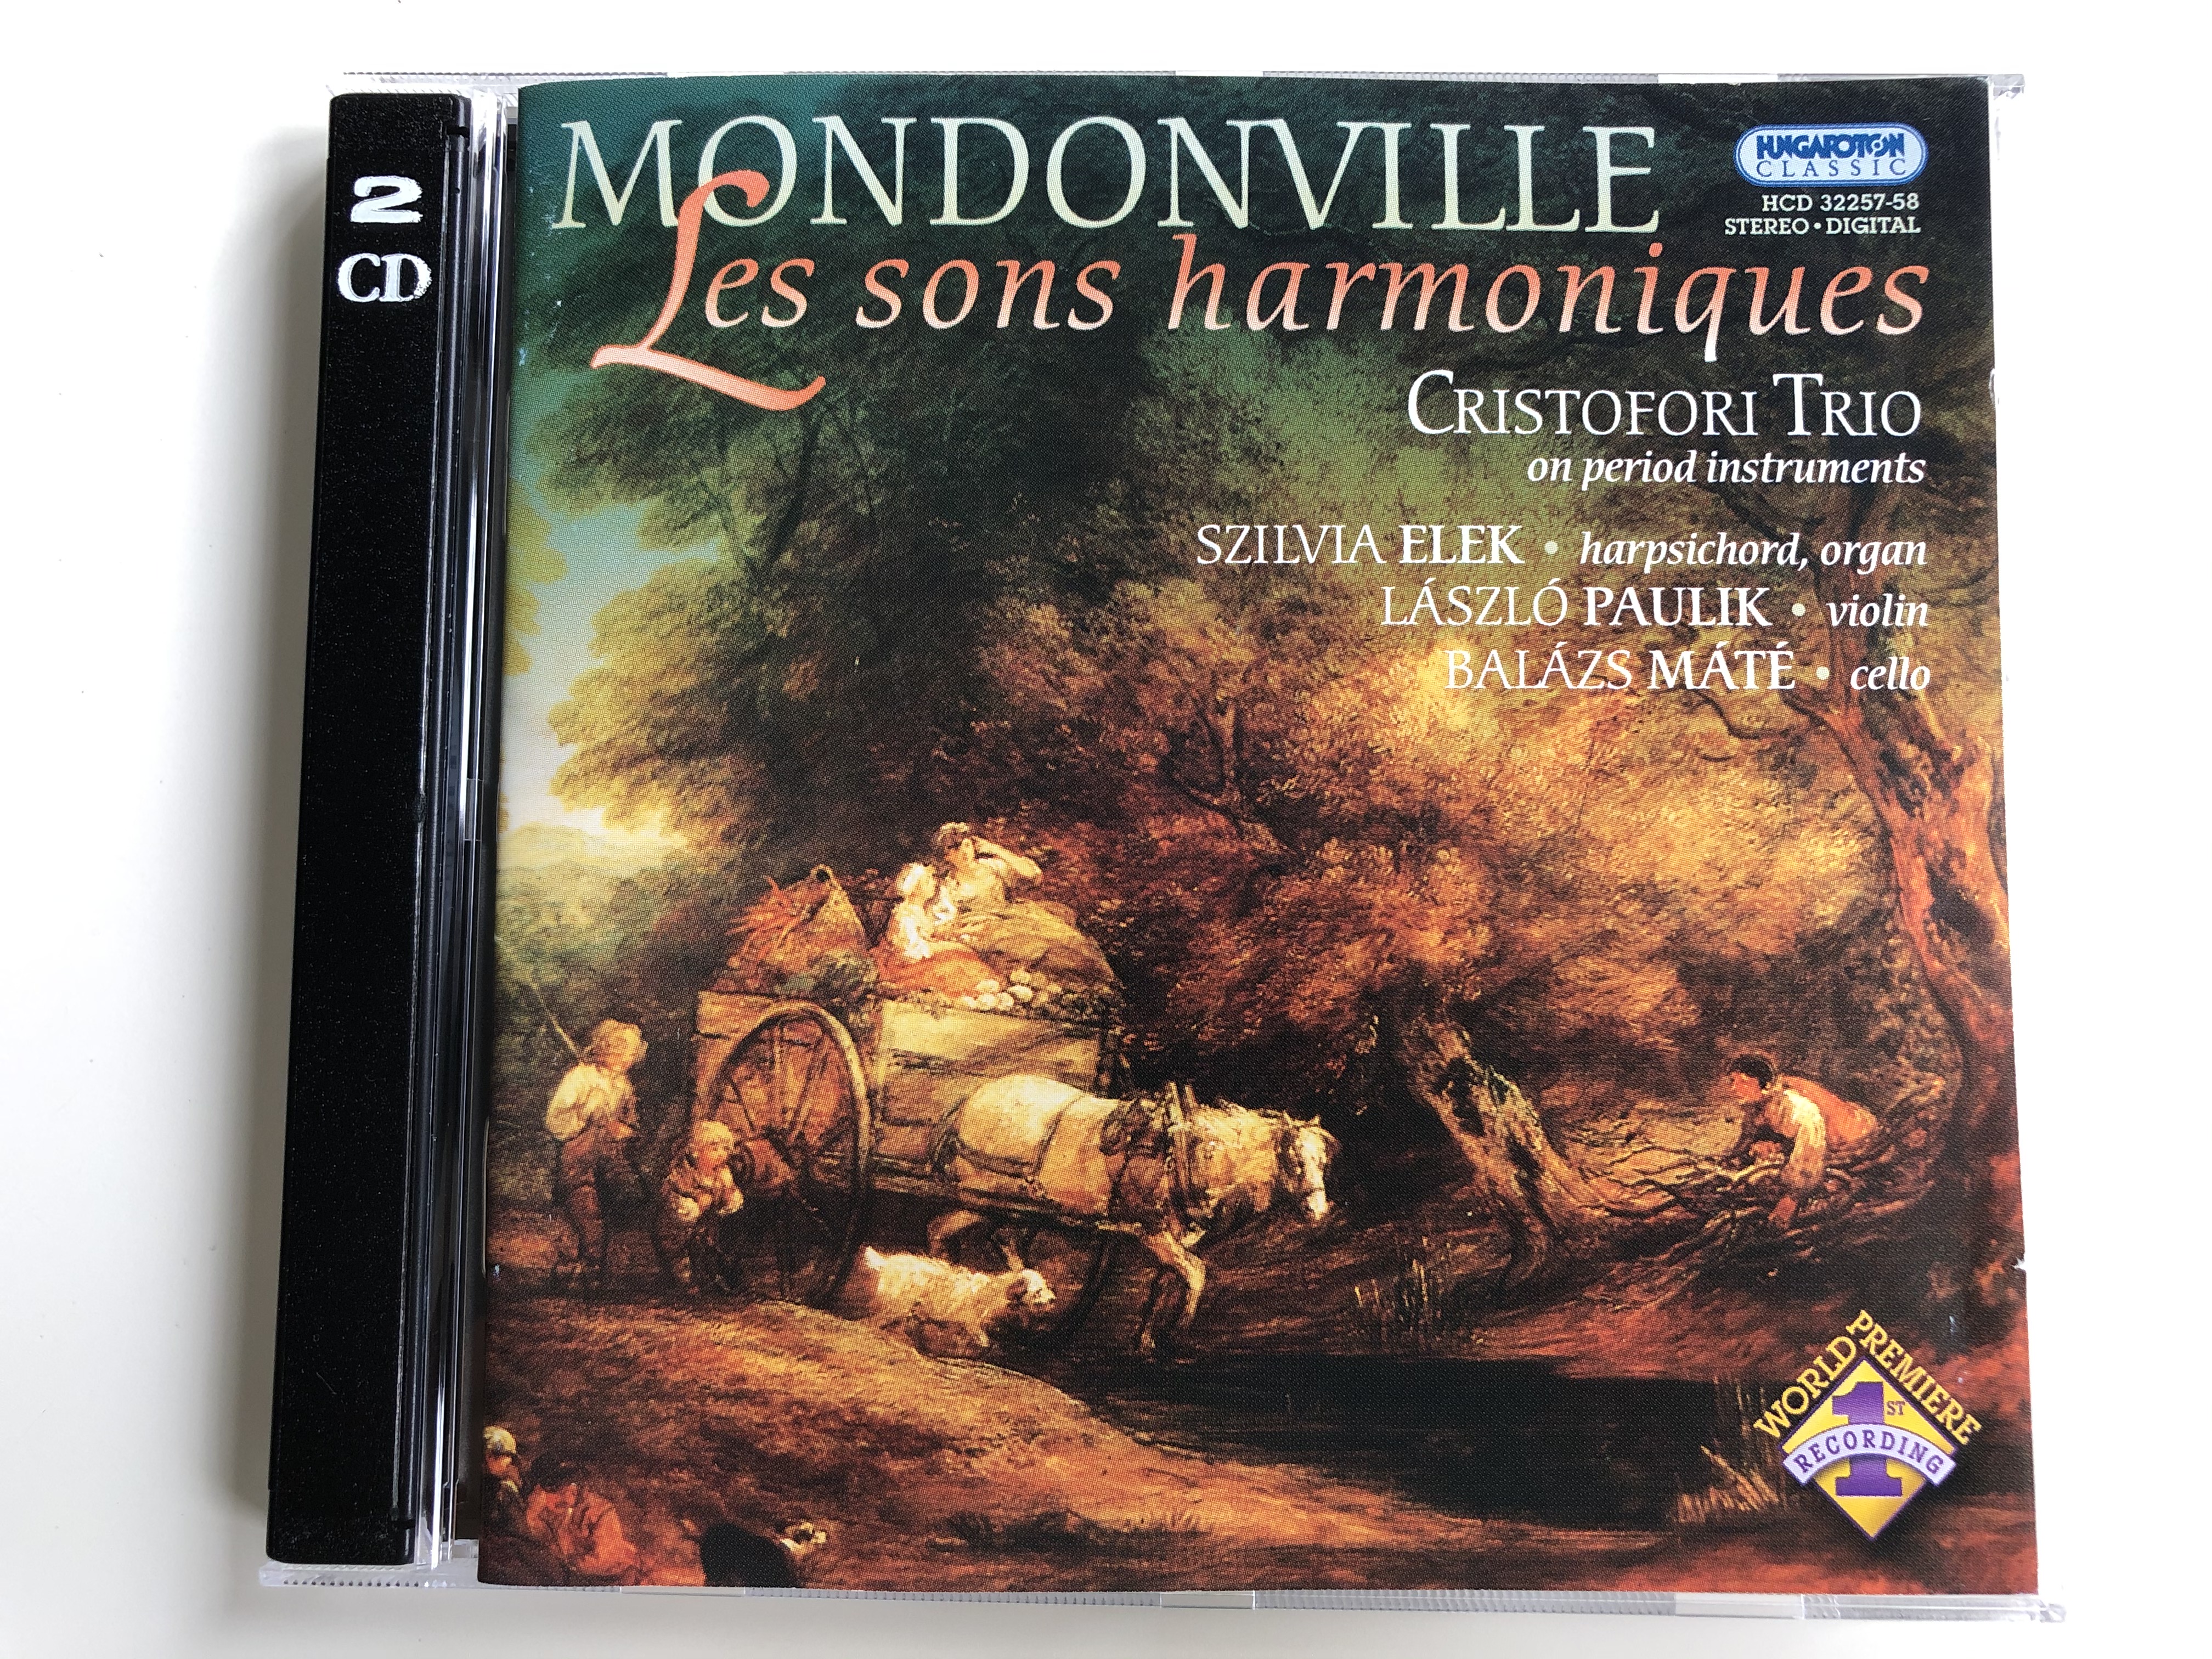 mondonville-les-sons-harmoniques-cristofori-trio-on-period-instruments-szilvia-elek-harpsichord-organ-laszlo-paulik-violin-balazs-mate-cello-hungaroton-classic-2x-audio-cd-2004-stereo-1-.jpg